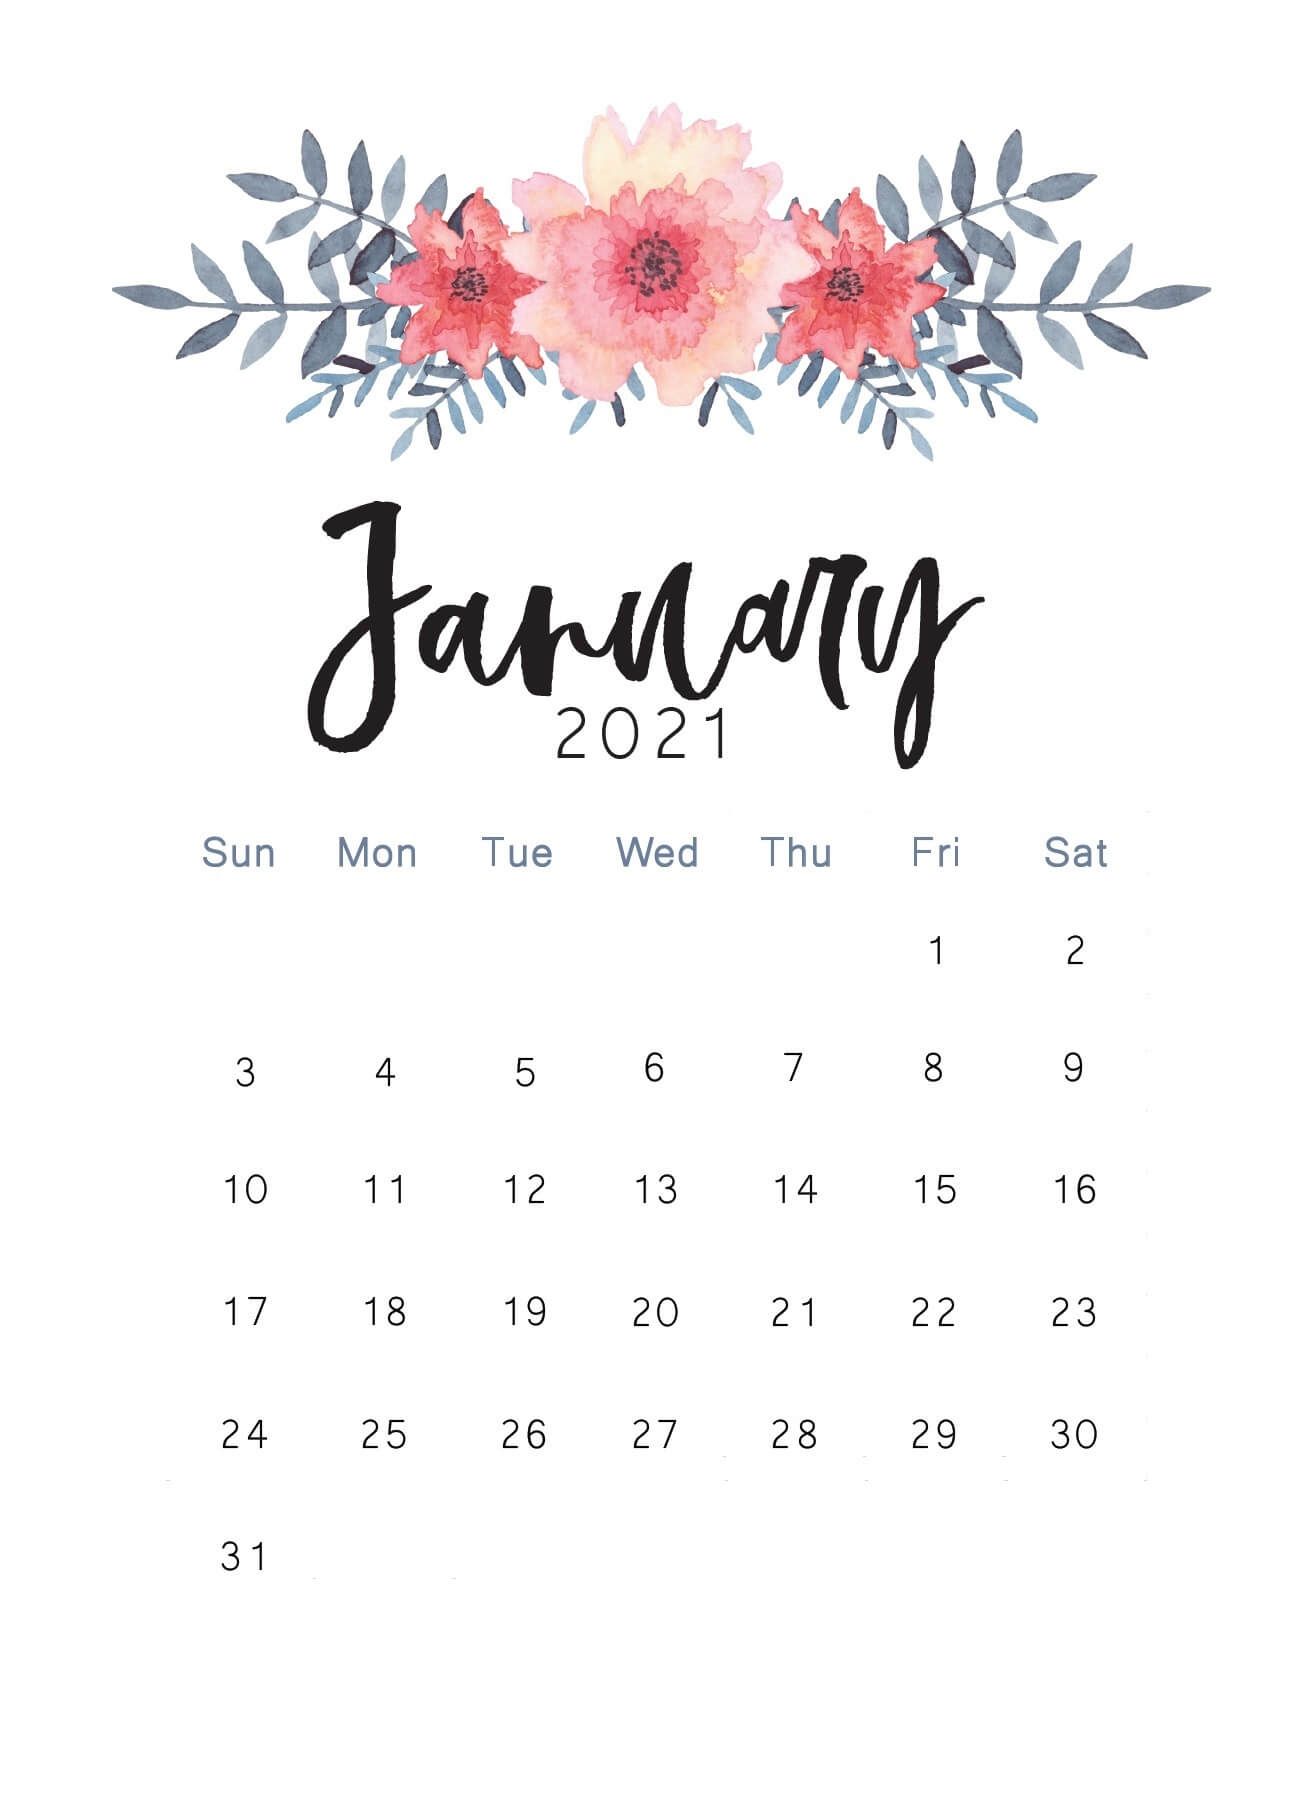 January 2021 Calendar Iphone Wallpaper Image ID 2